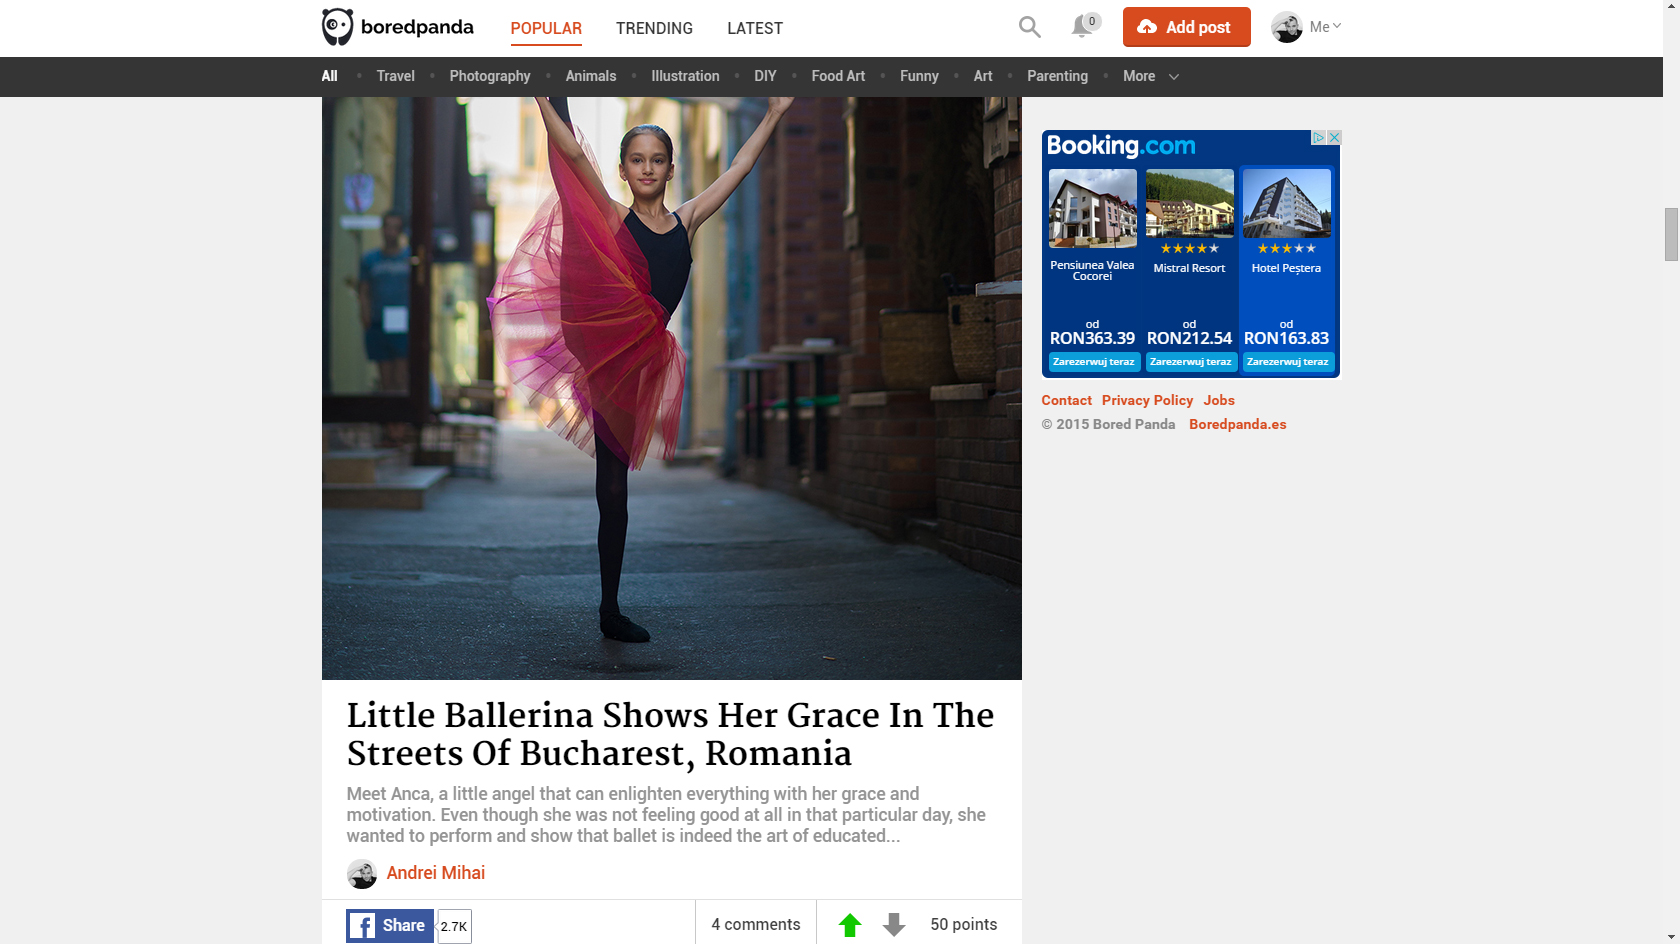 Little Ballerina Goes Popular on BoredPanda